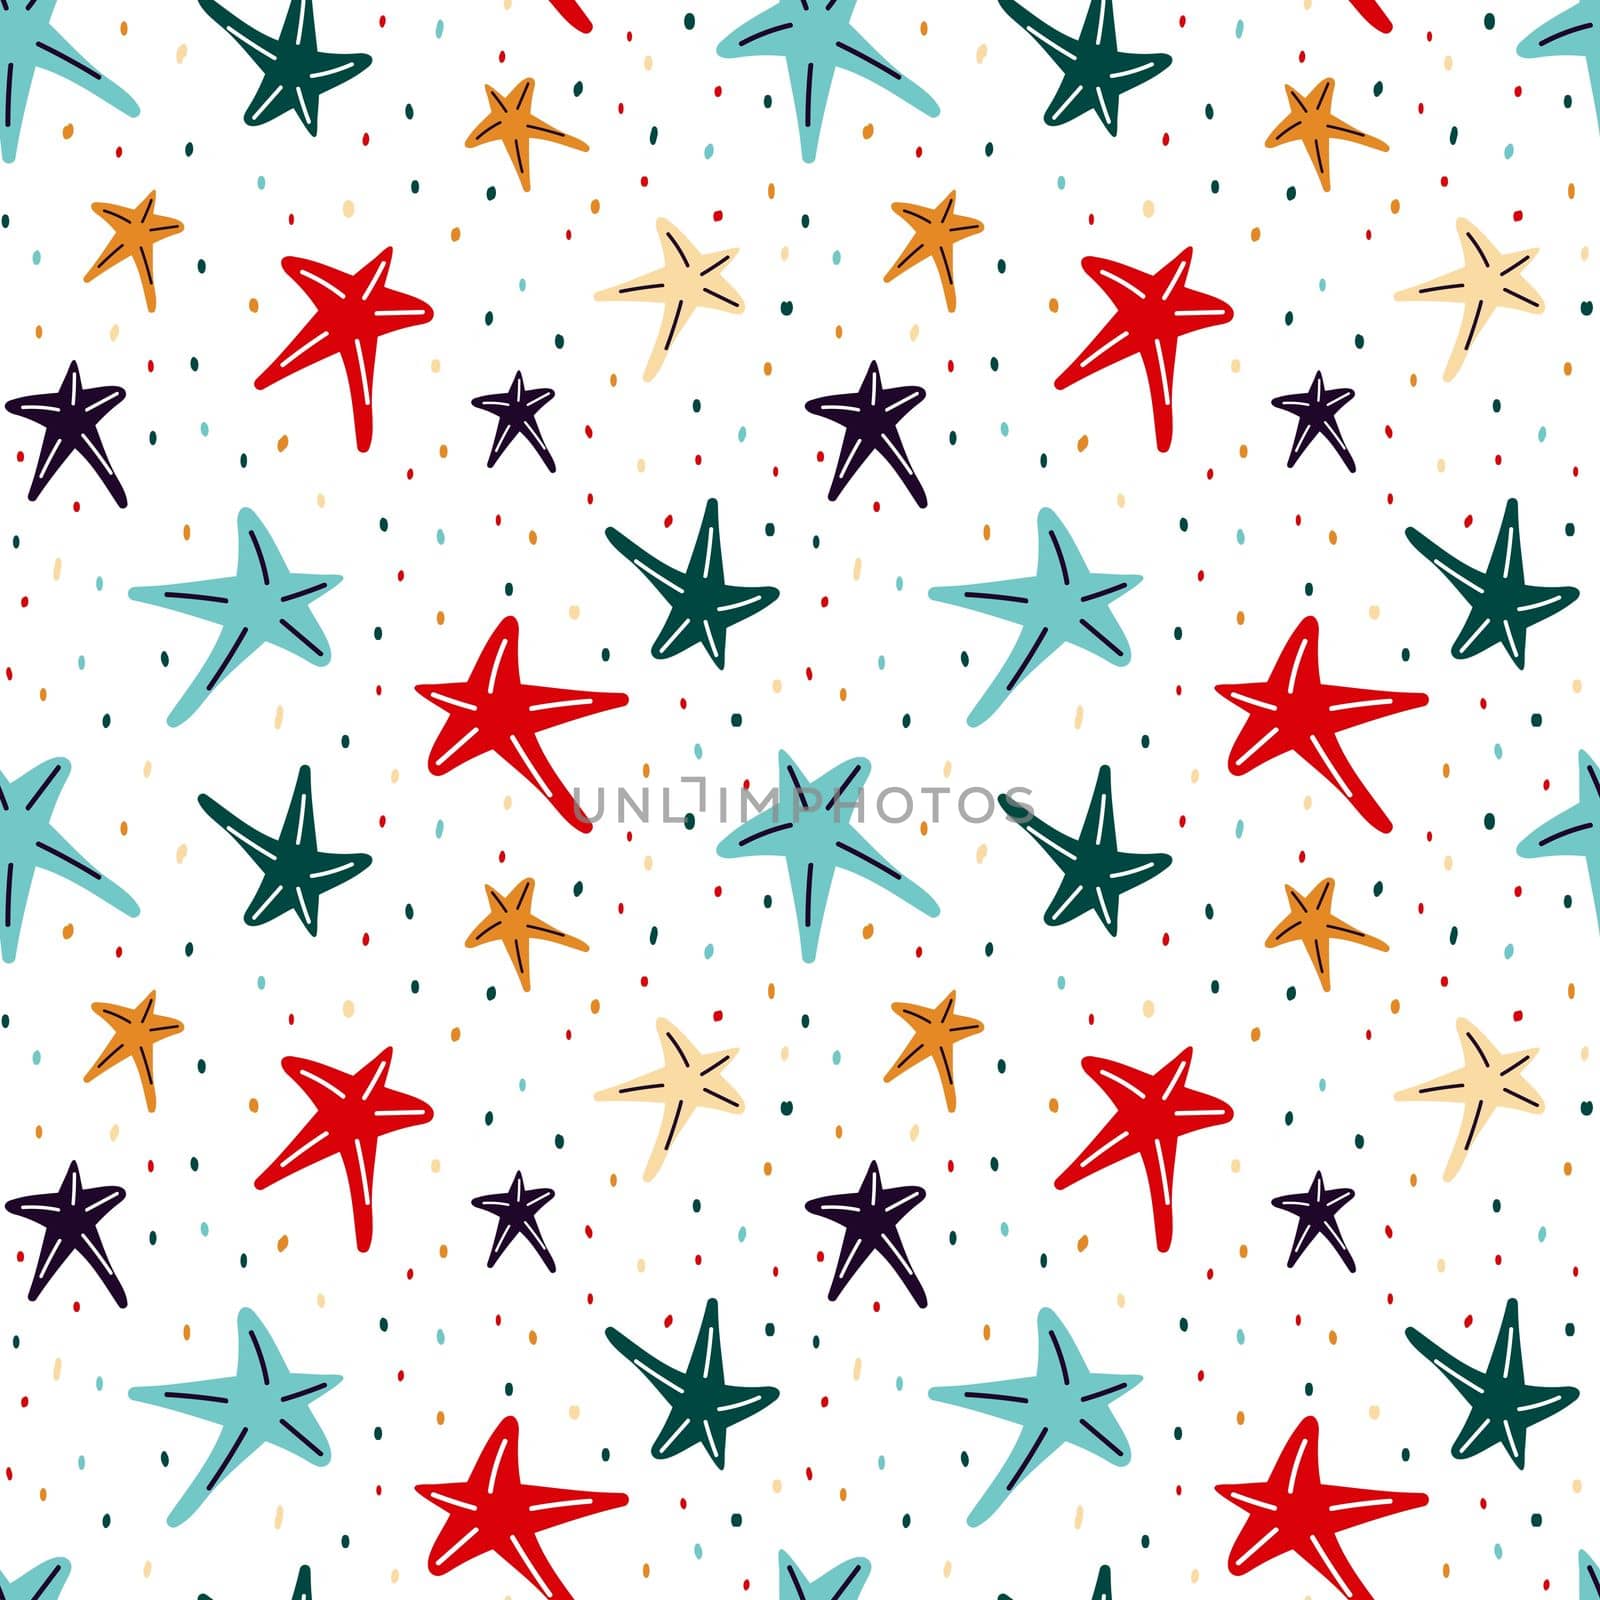 Sea stars seamless pattern. Marine pattern with sea stars on a white background